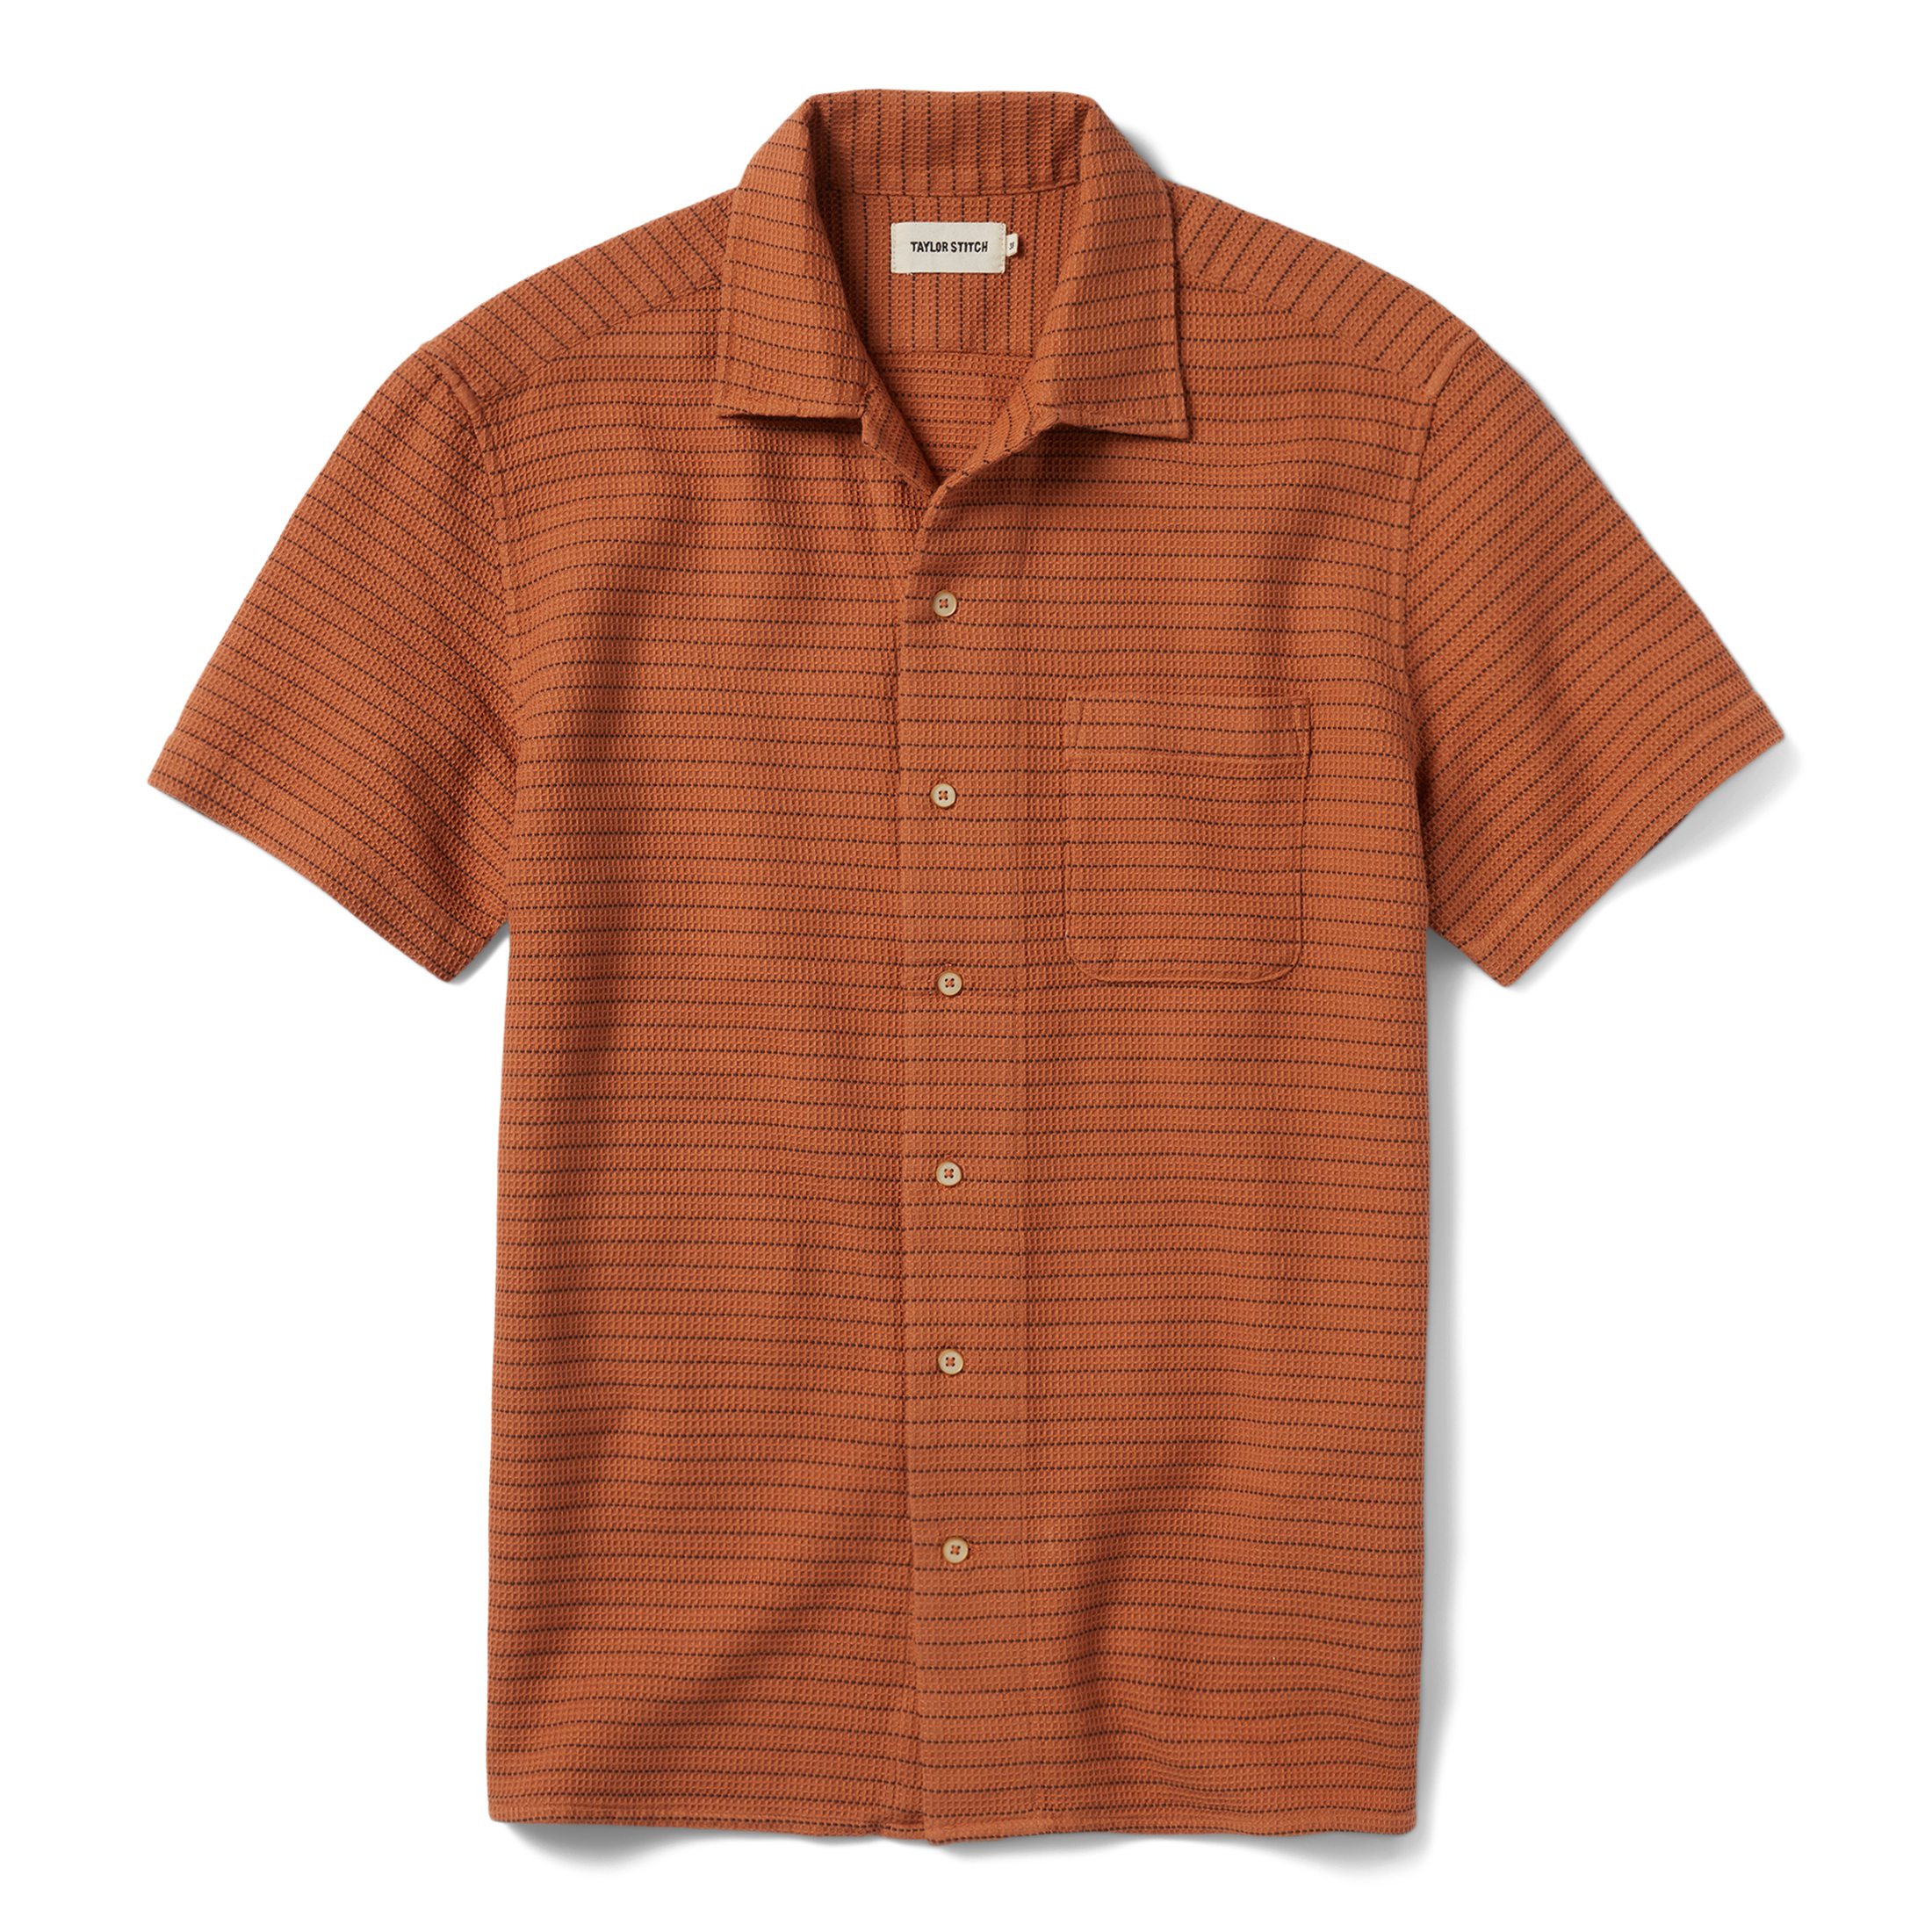 Taylor Stitch The Hawthorne Short Sleeve Shirt - Rust Pickstitch Waffle